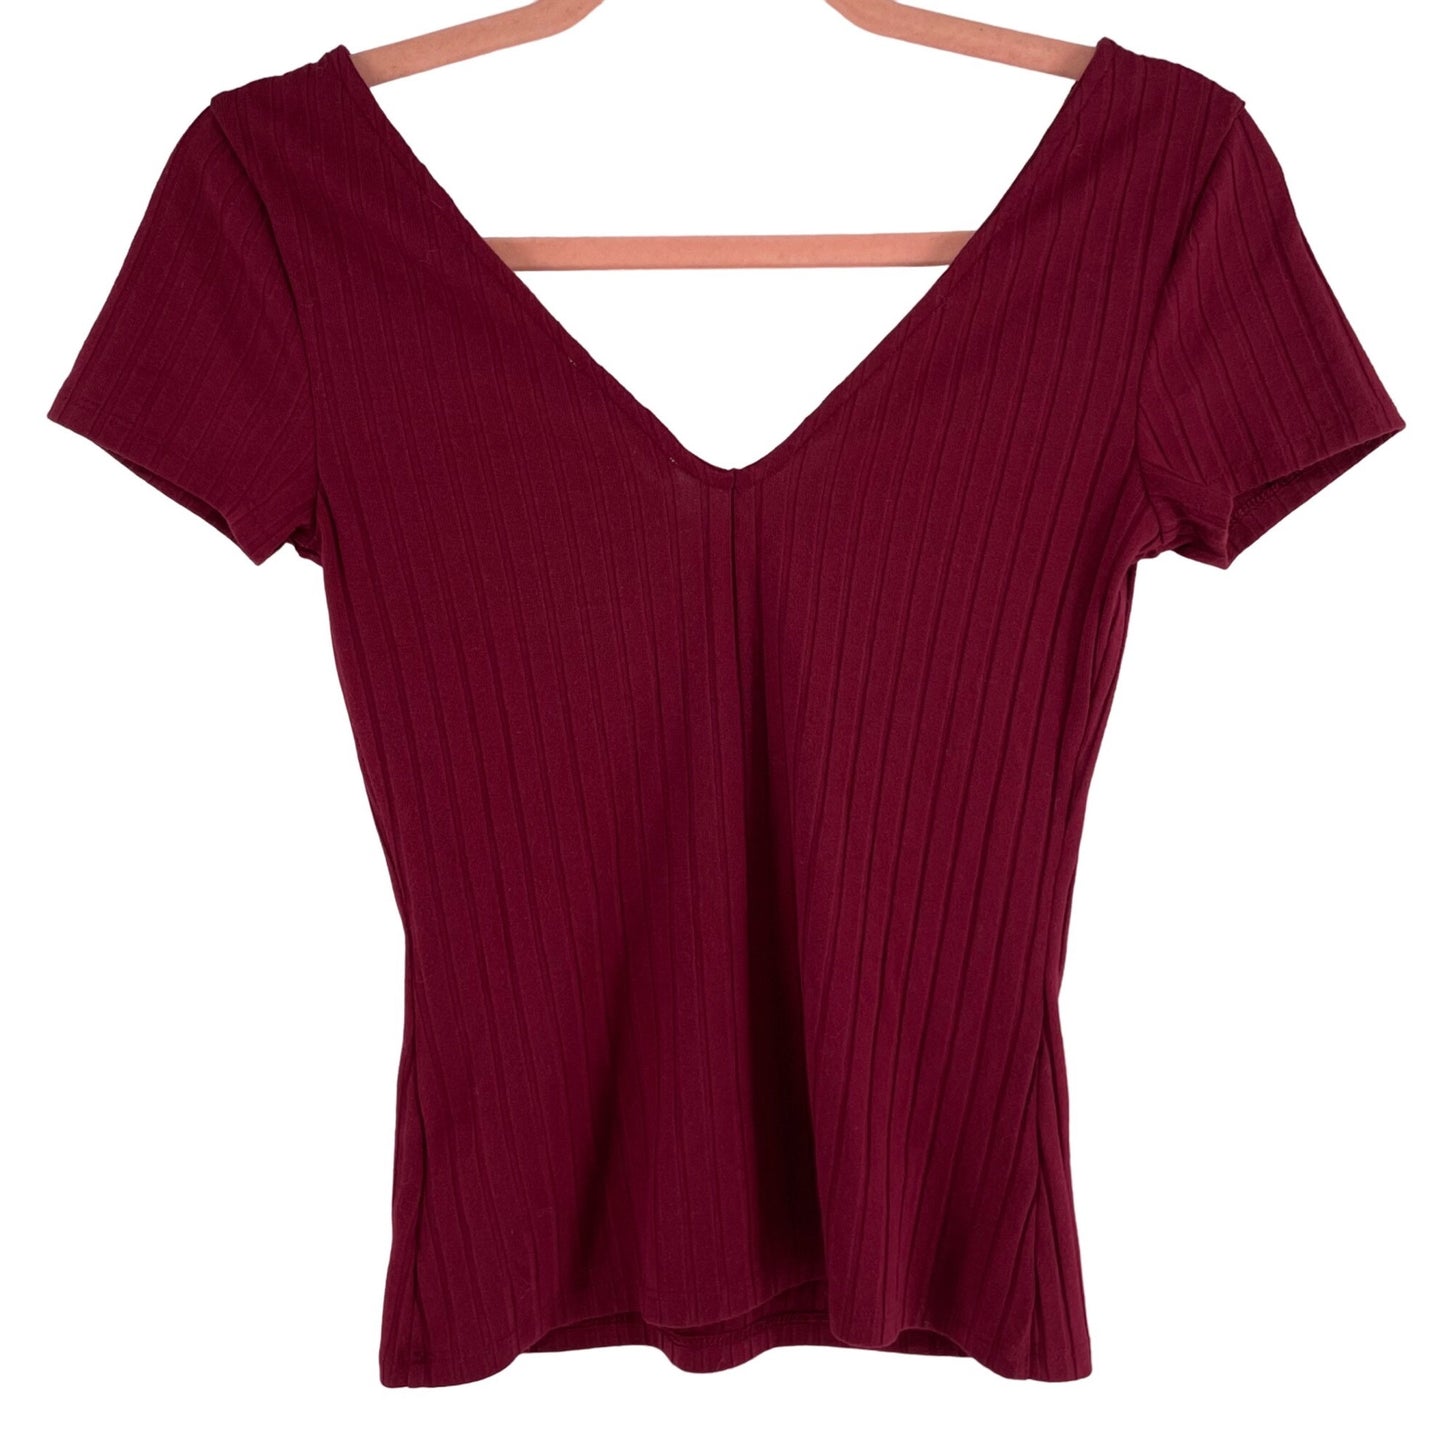 Express Women's Size XS V-Neck Maroon/Burgundy Ribbed Short-Sleeved Shirt